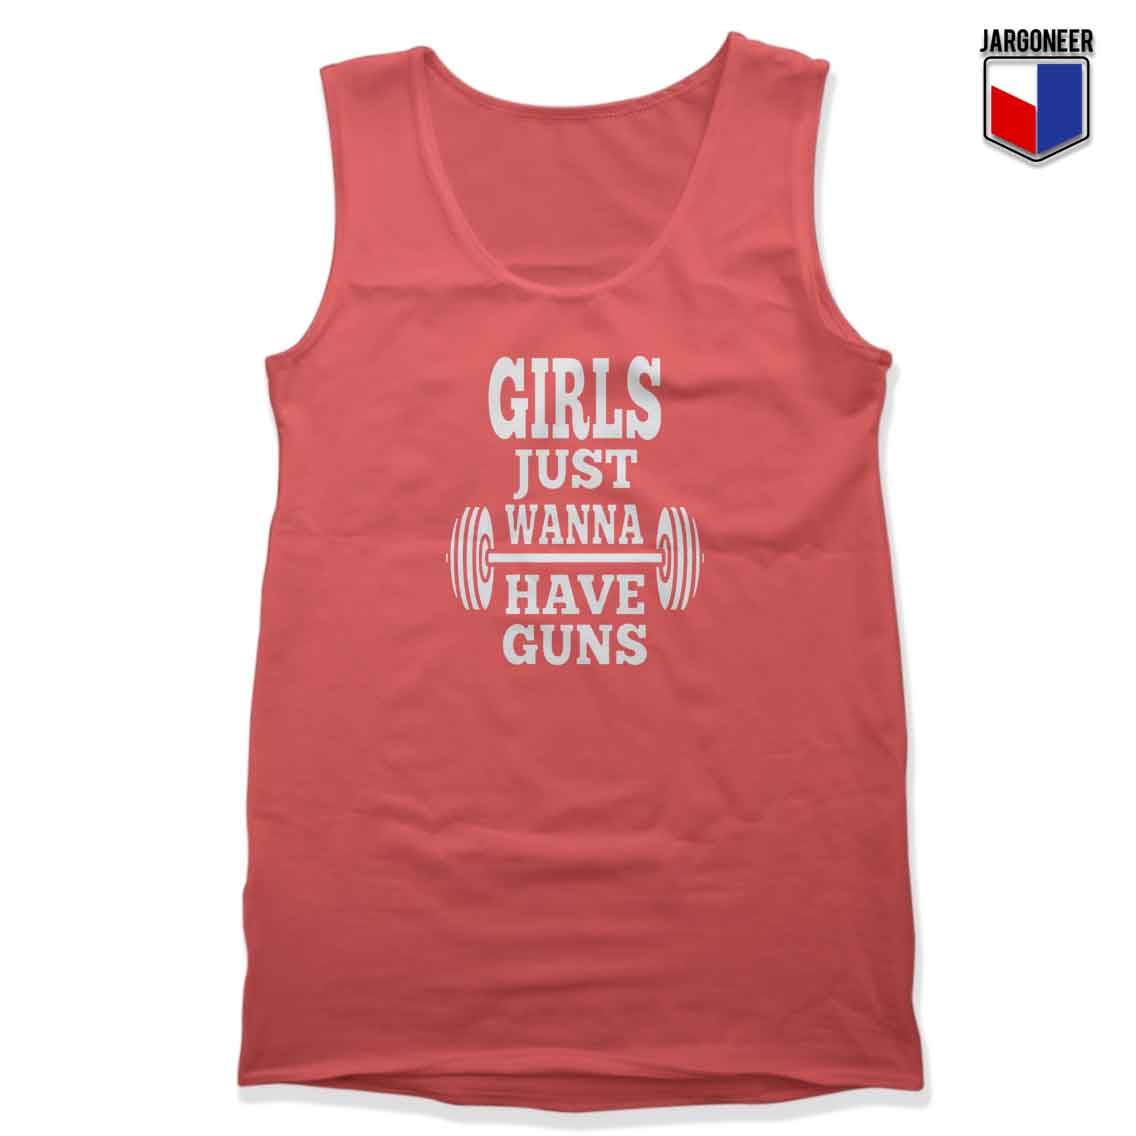 Girls Just Wanna Have Guns - Shop Unique Graphic Cool Shirt Designs